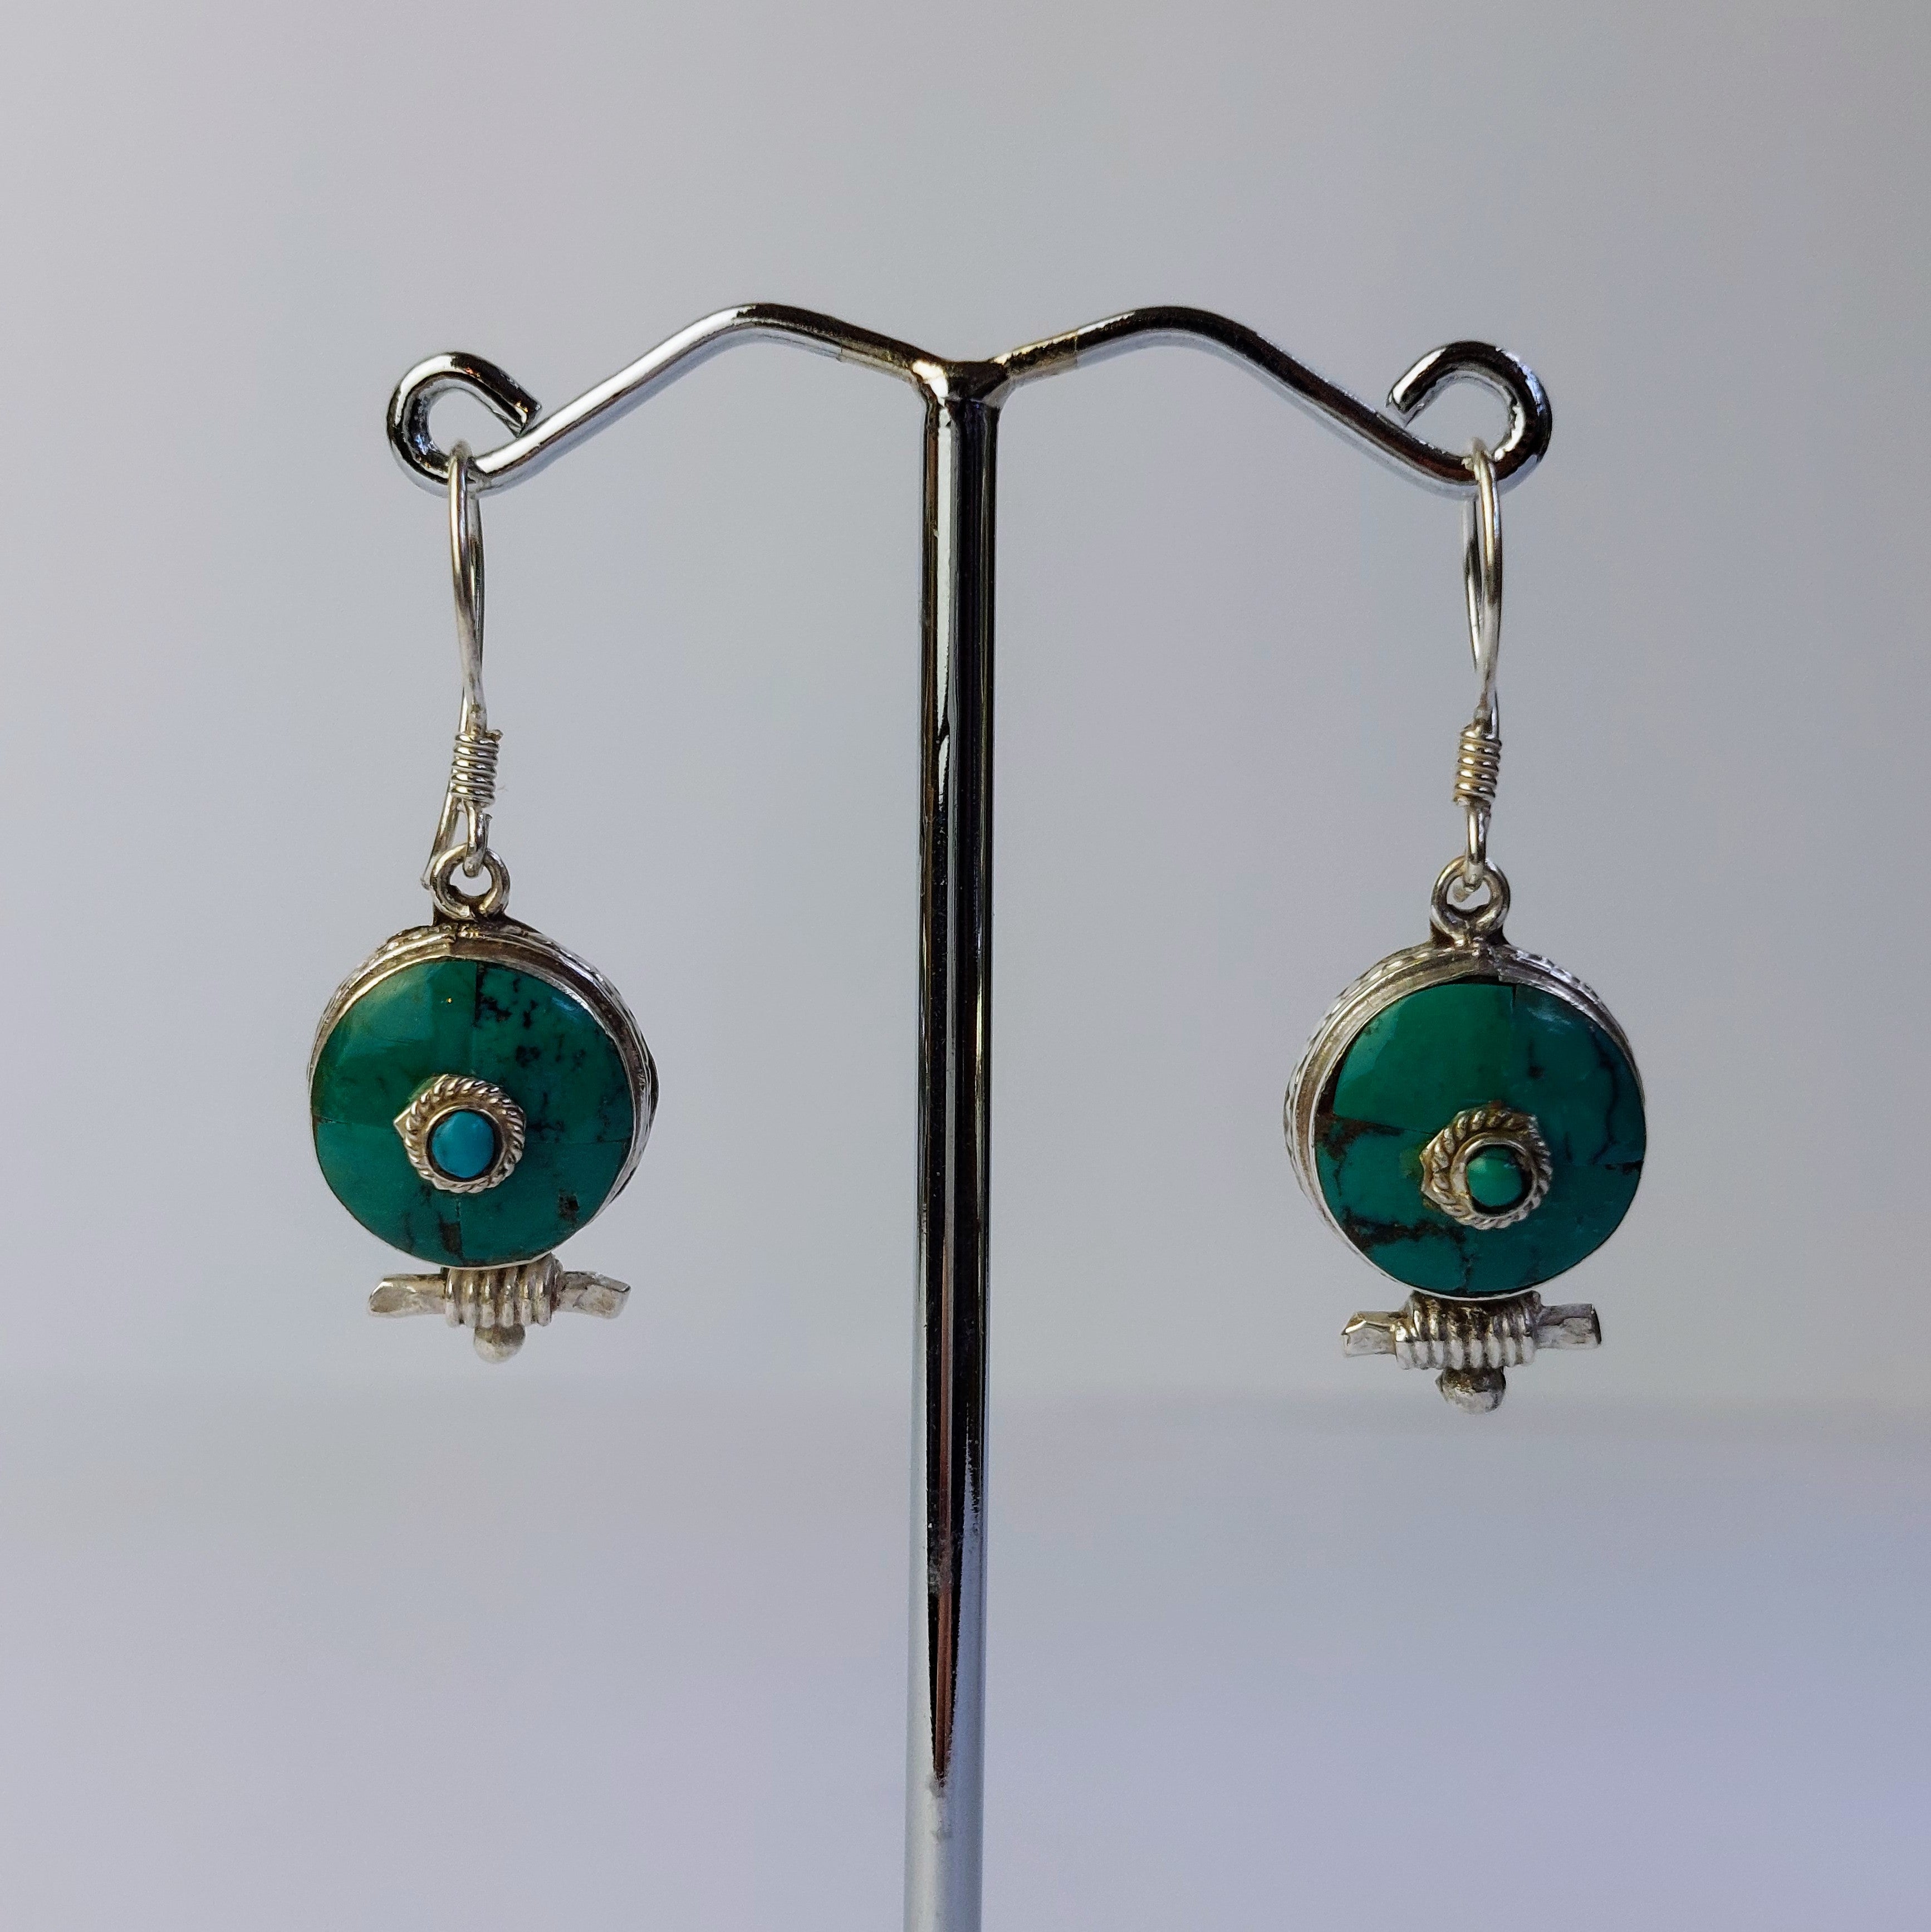 Turquoise Mandala Earrings - The Nancy Smillie Shop - Art, Jewellery & Designer Gifts Glasgow